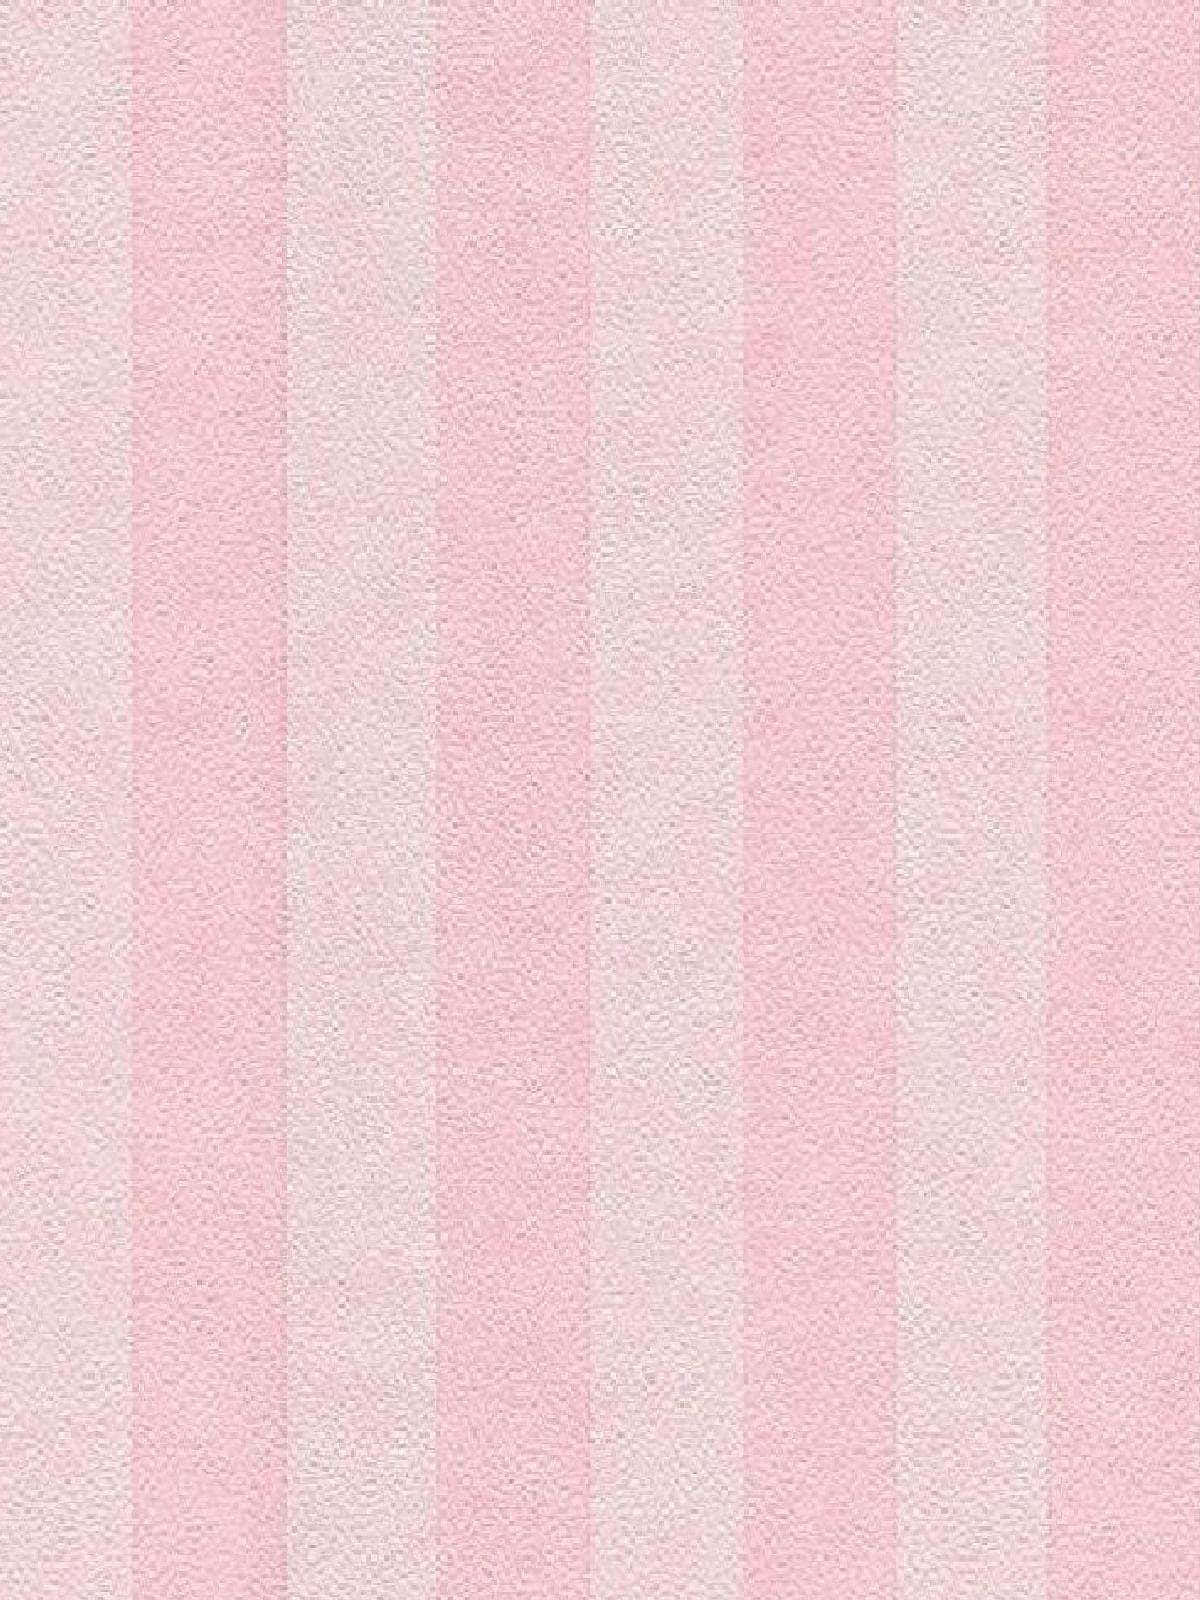 Soft Pink Stripes Wallpaper